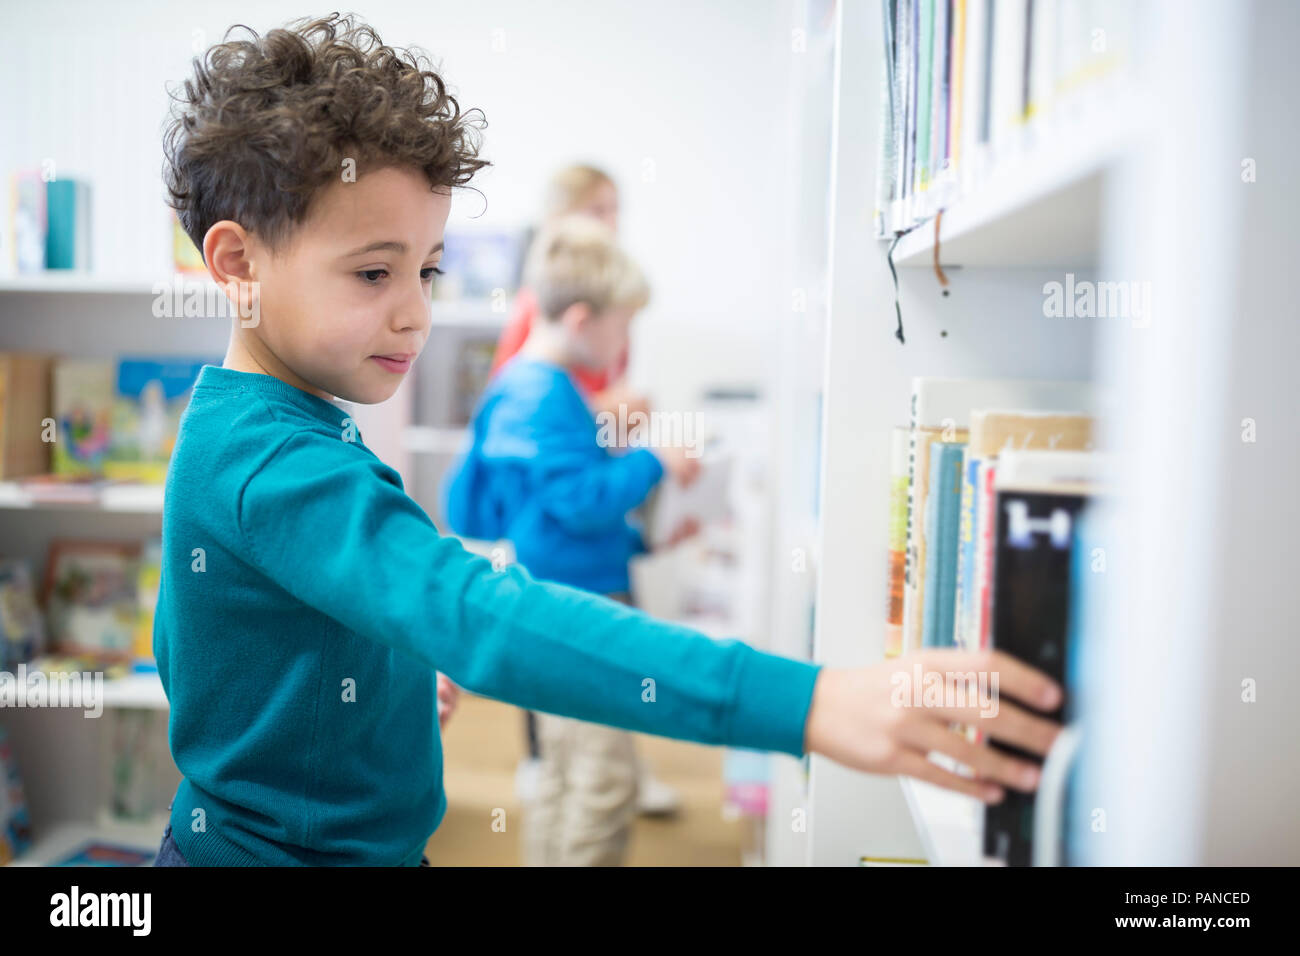 Schoolboy taking book from shelf in school library Stock Photo